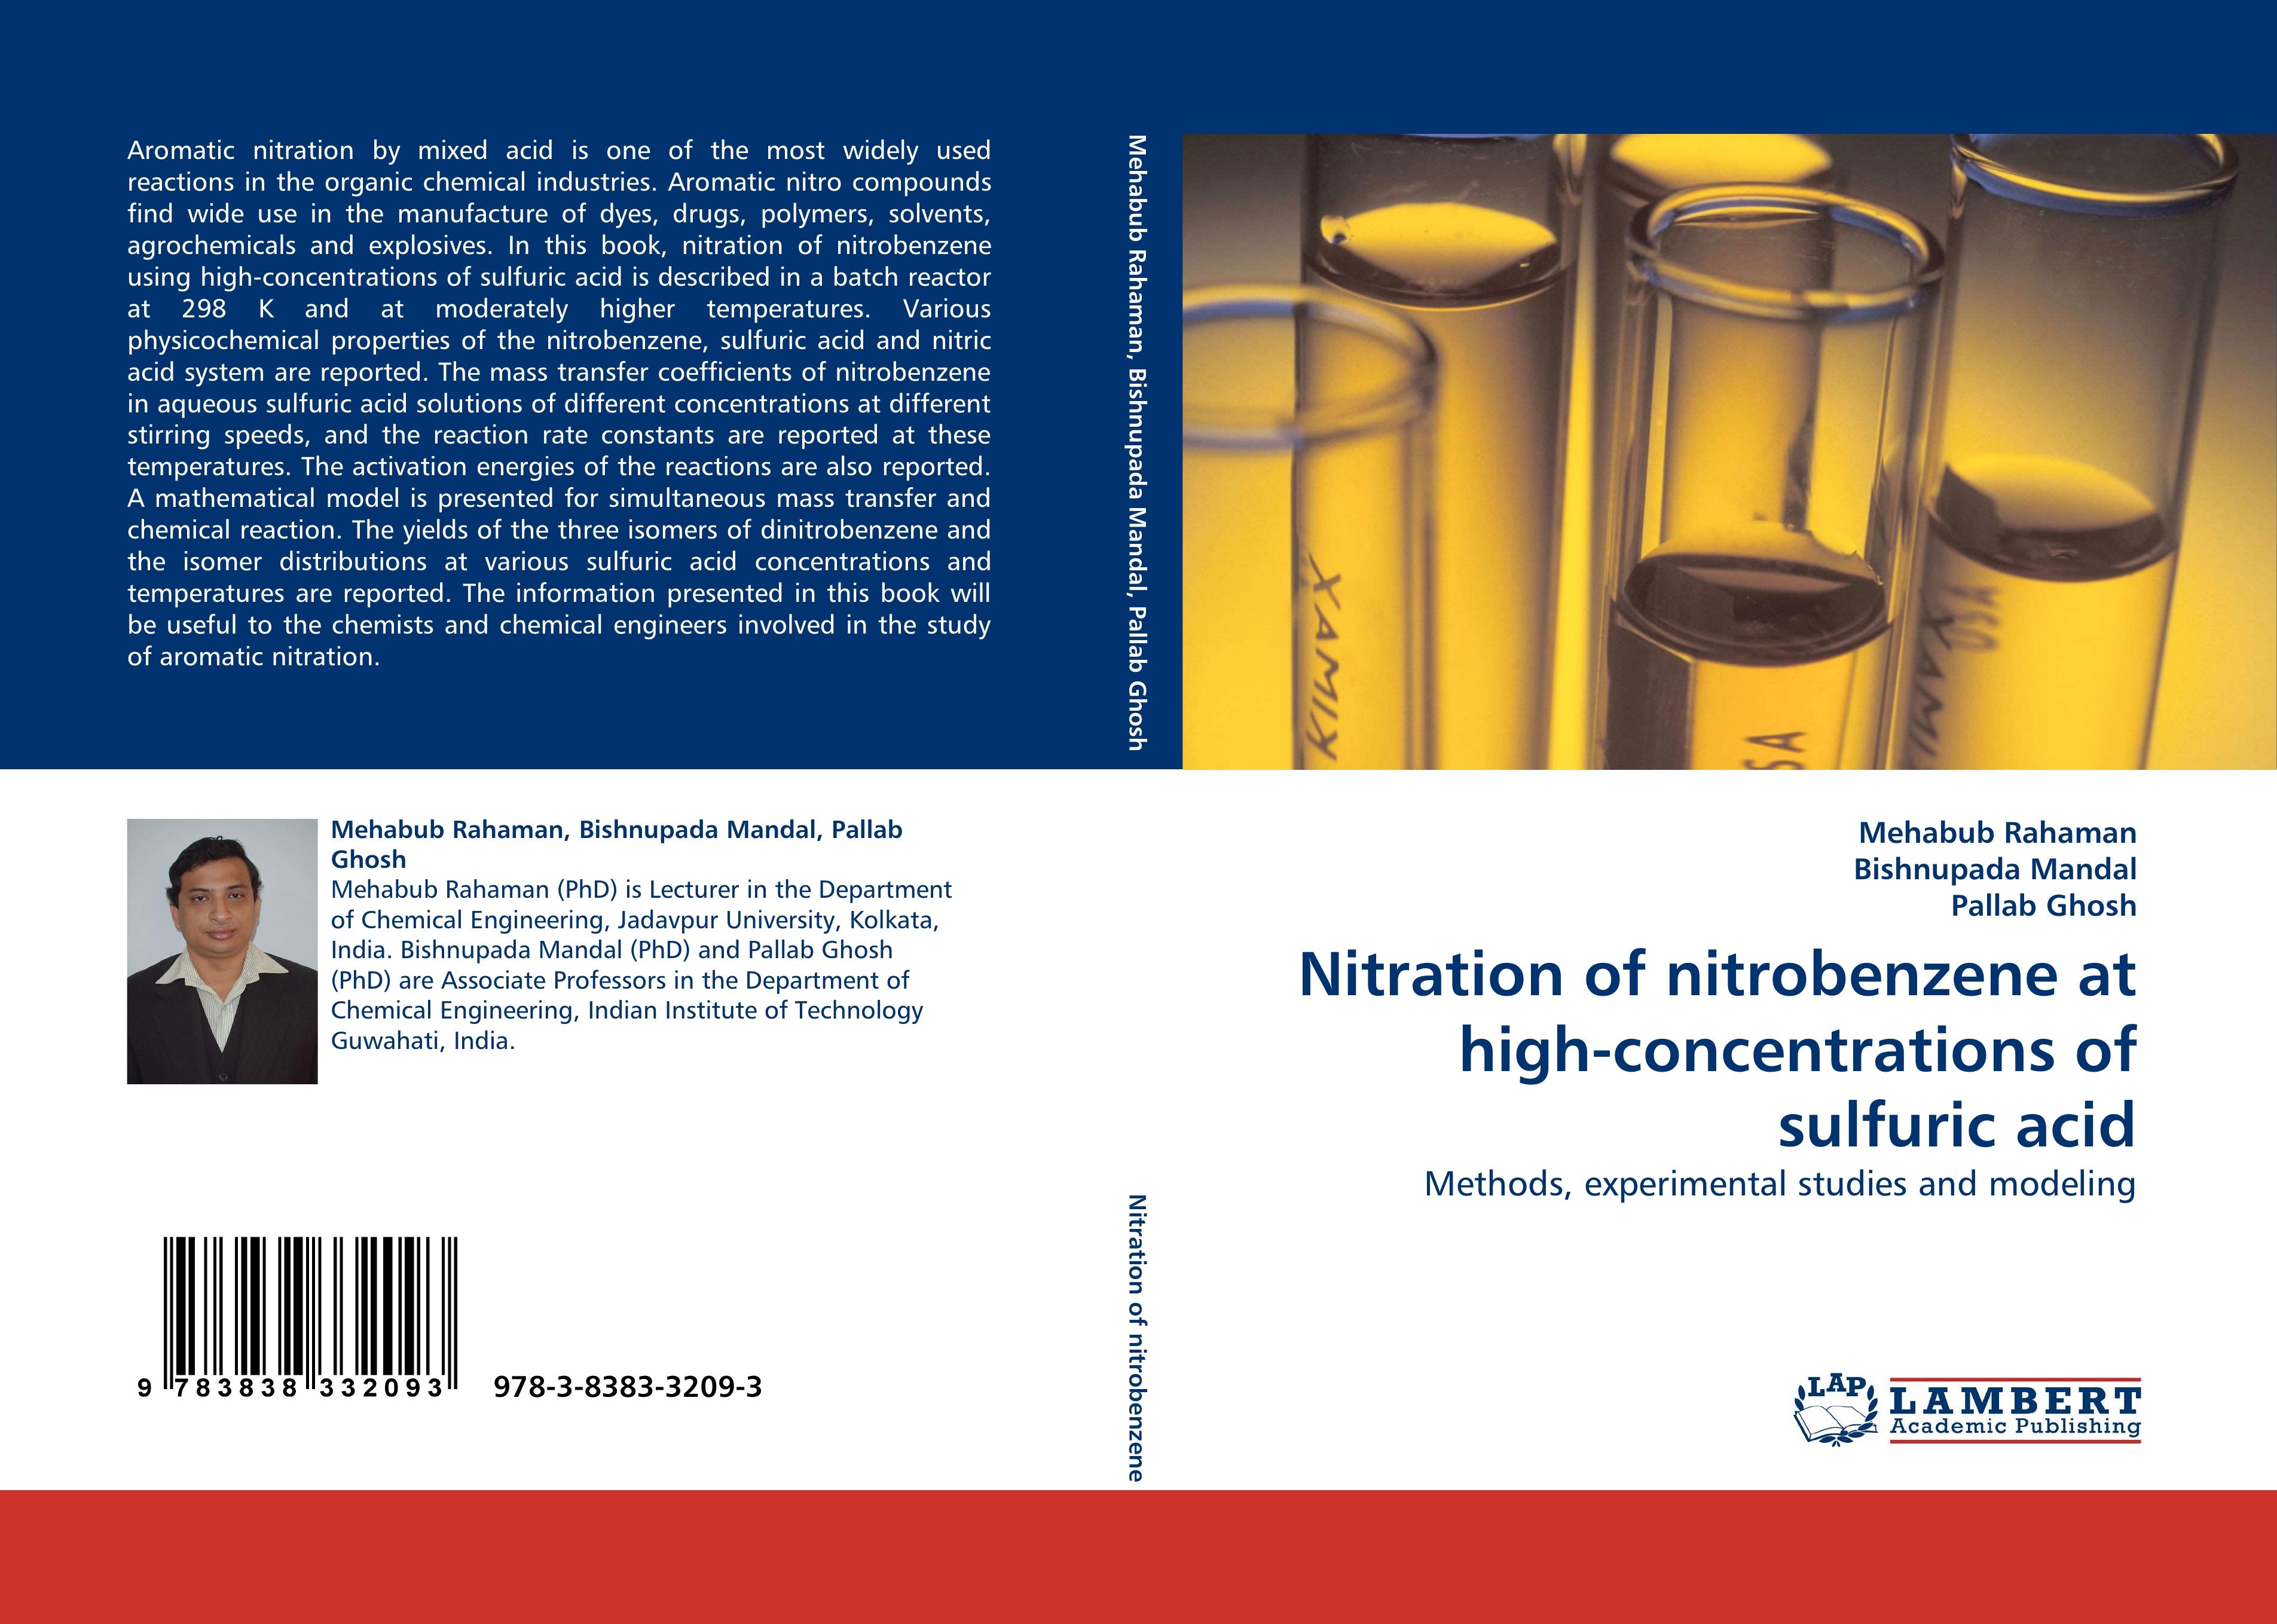 Nitration of nitrobenzene at high-concentrations of sulfuric acid - Mehabub Rahaman|Bishnupada Mandal|Pallab Ghosh